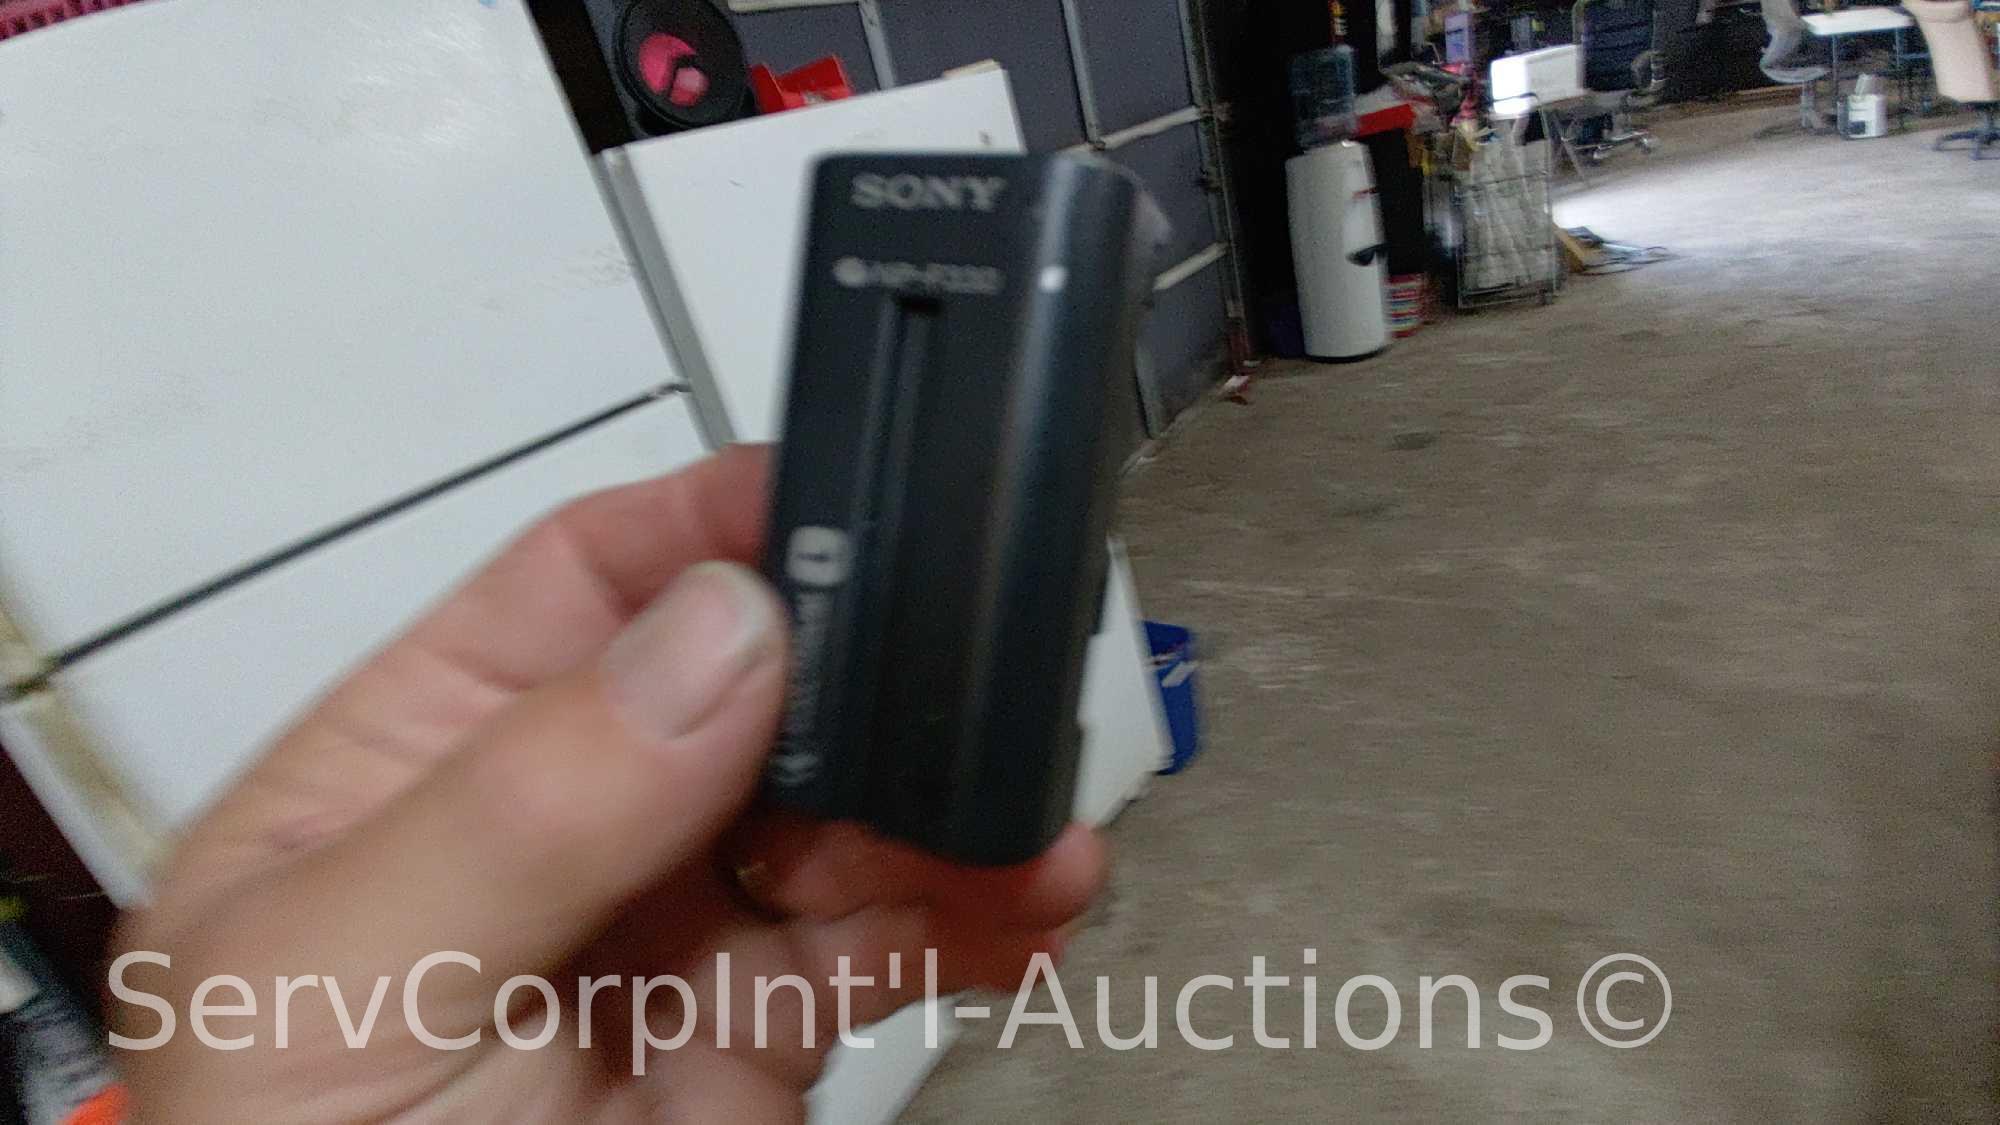 Lot on Shelf of Sony Handycam with Bag, Sony Digital Mavica Camera with Bag, Ambico 54" Tripod,